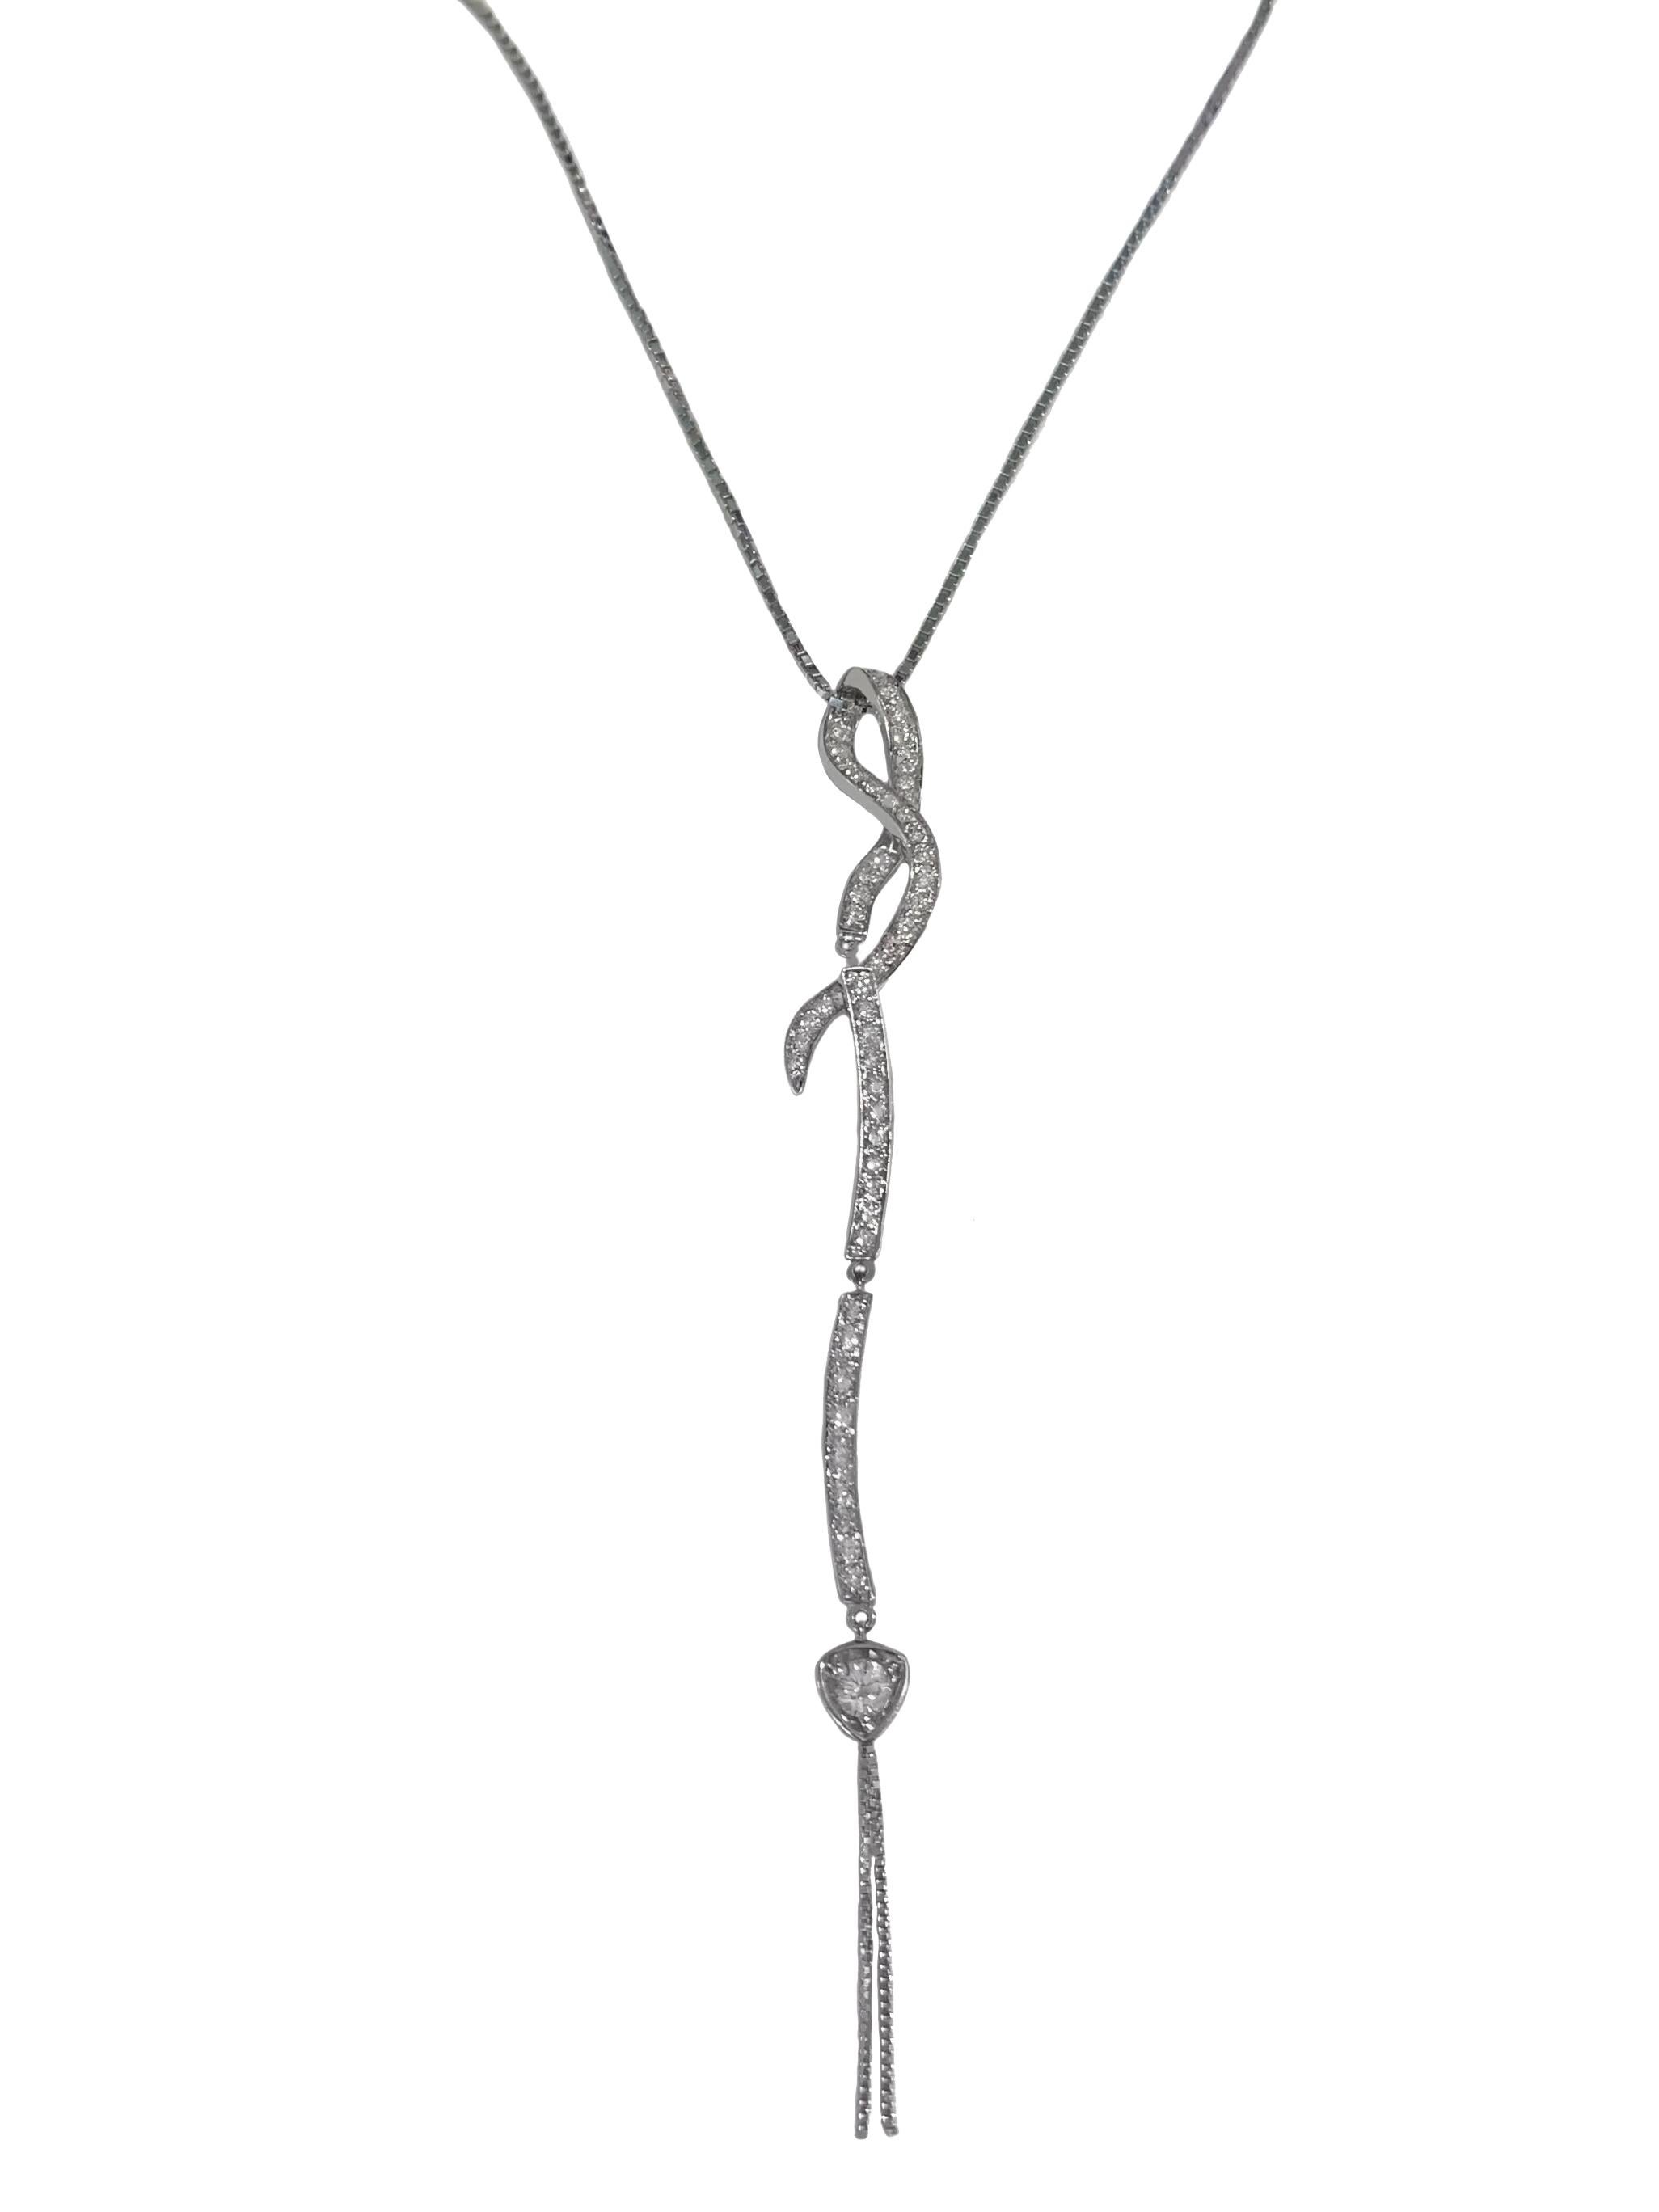 amenadiel necklace for sale